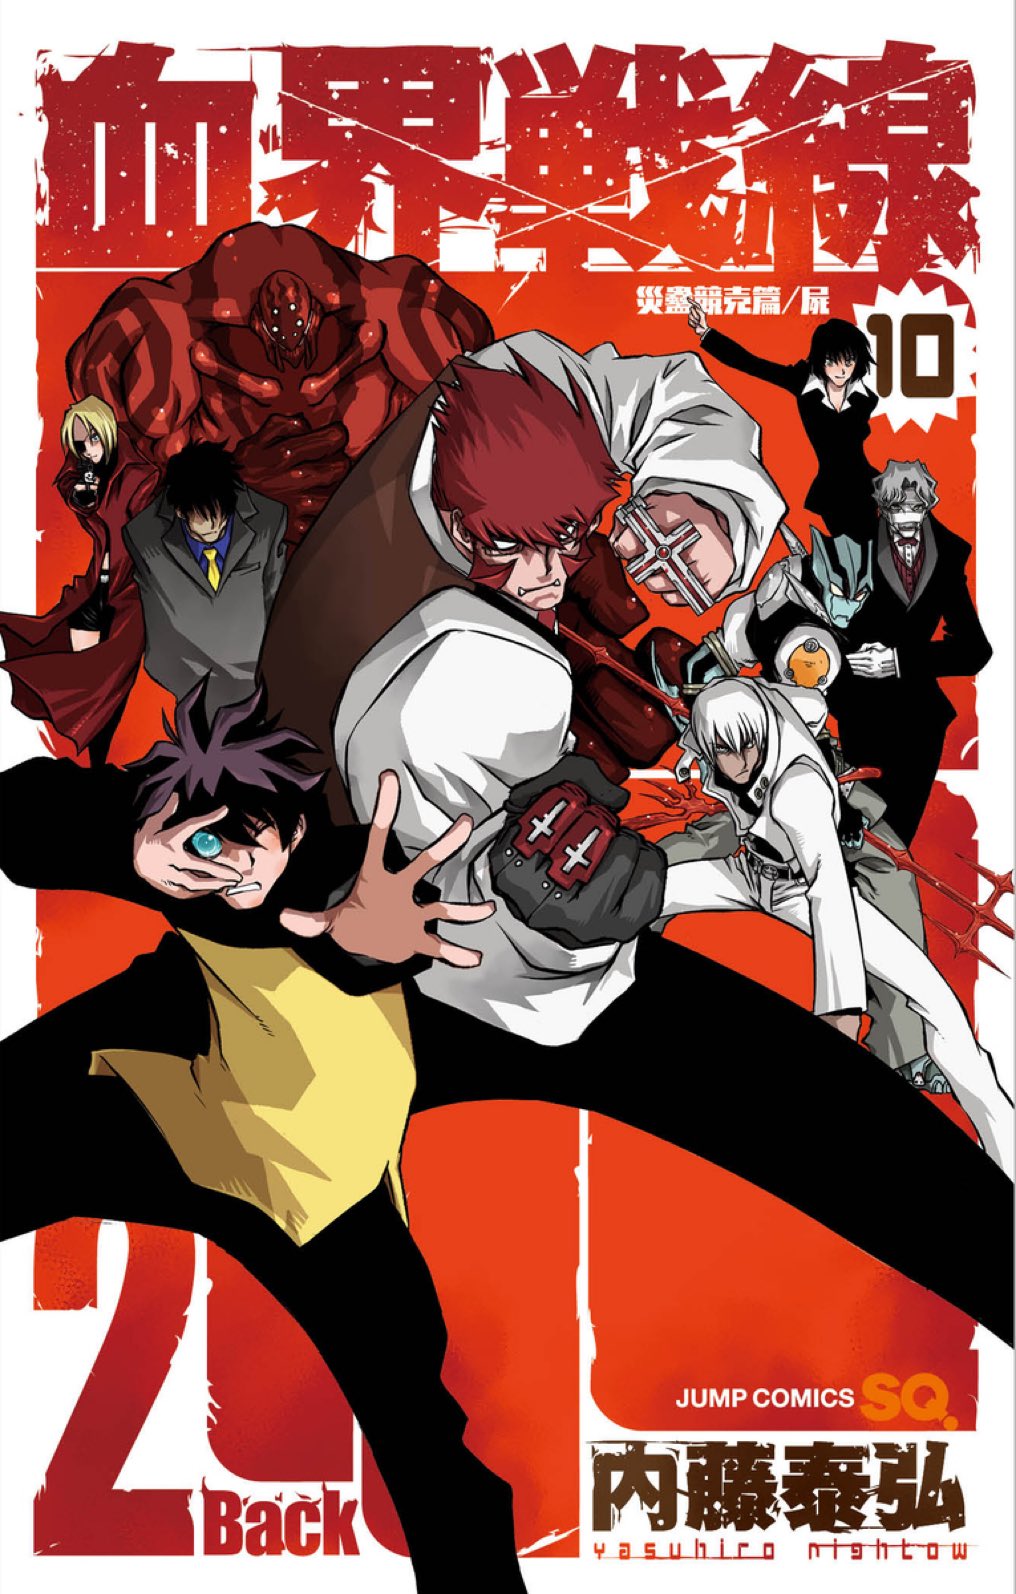 Willgeek - [FUNIMATION] - CONFIRMADO BLOOD BLOCKADE BATTLEFRONT DUBLADO A  Funimation confirmou no catálogo brasileiro: 'Blood Blockade Battlefront'  (Kekkai Sensen). O anime baseado na mangá de Yasuhiro Nightow estará  disponível no catálogo